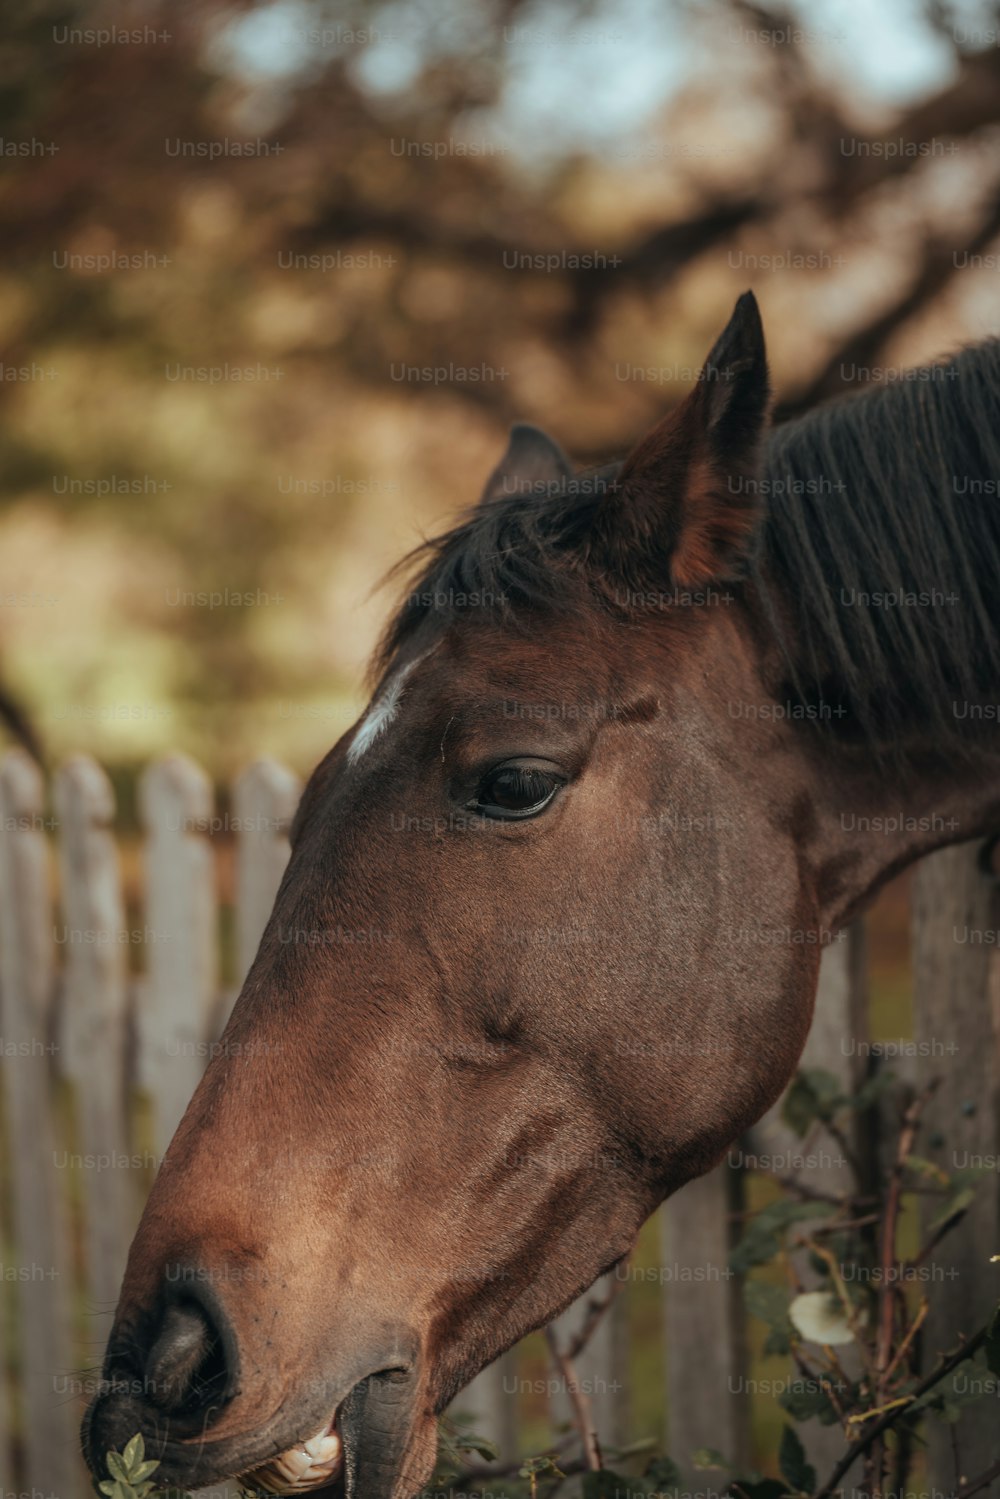 30k+ Horse Face Pictures  Download Free Images on Unsplash